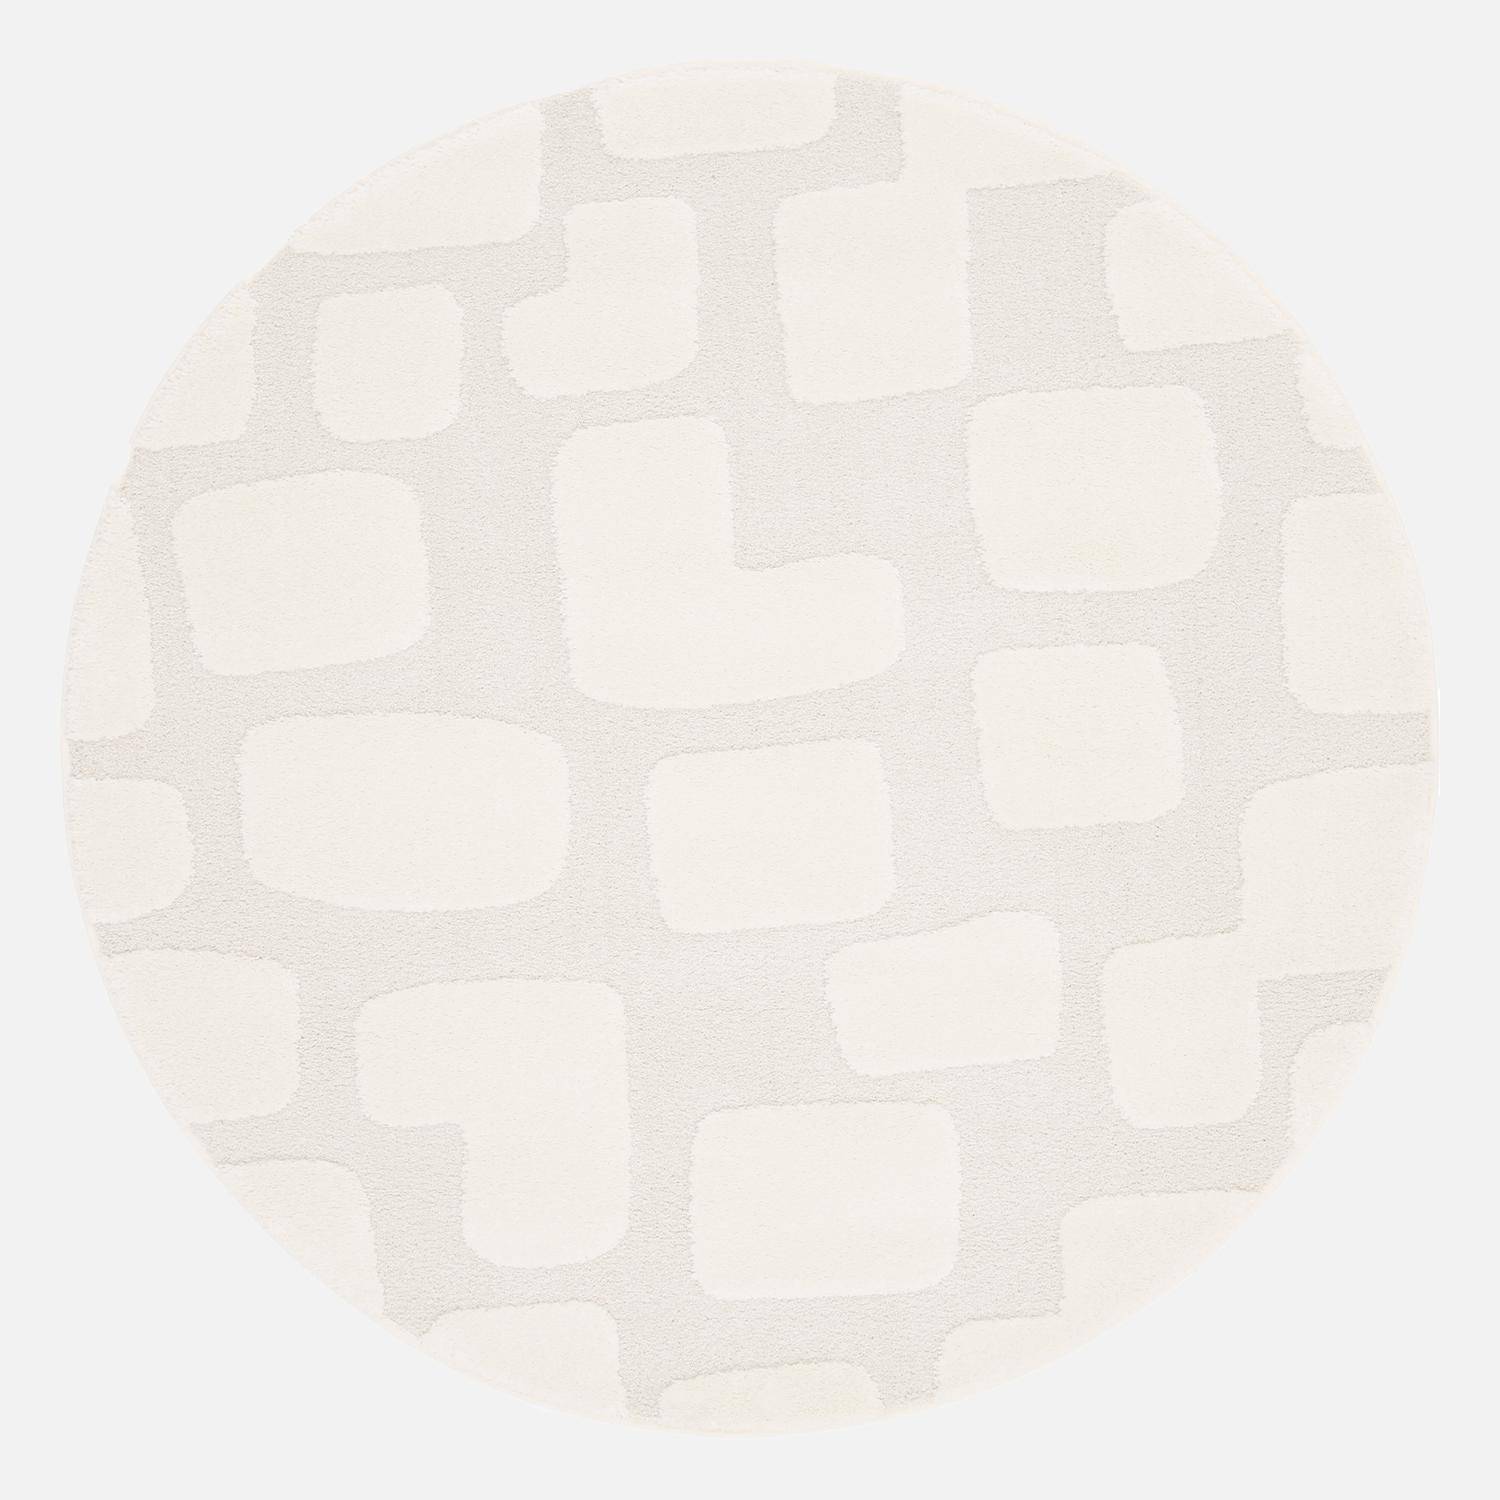 160cm interior rug with paving pattern in relief, cream , Dan, Ø160 cm Photo1